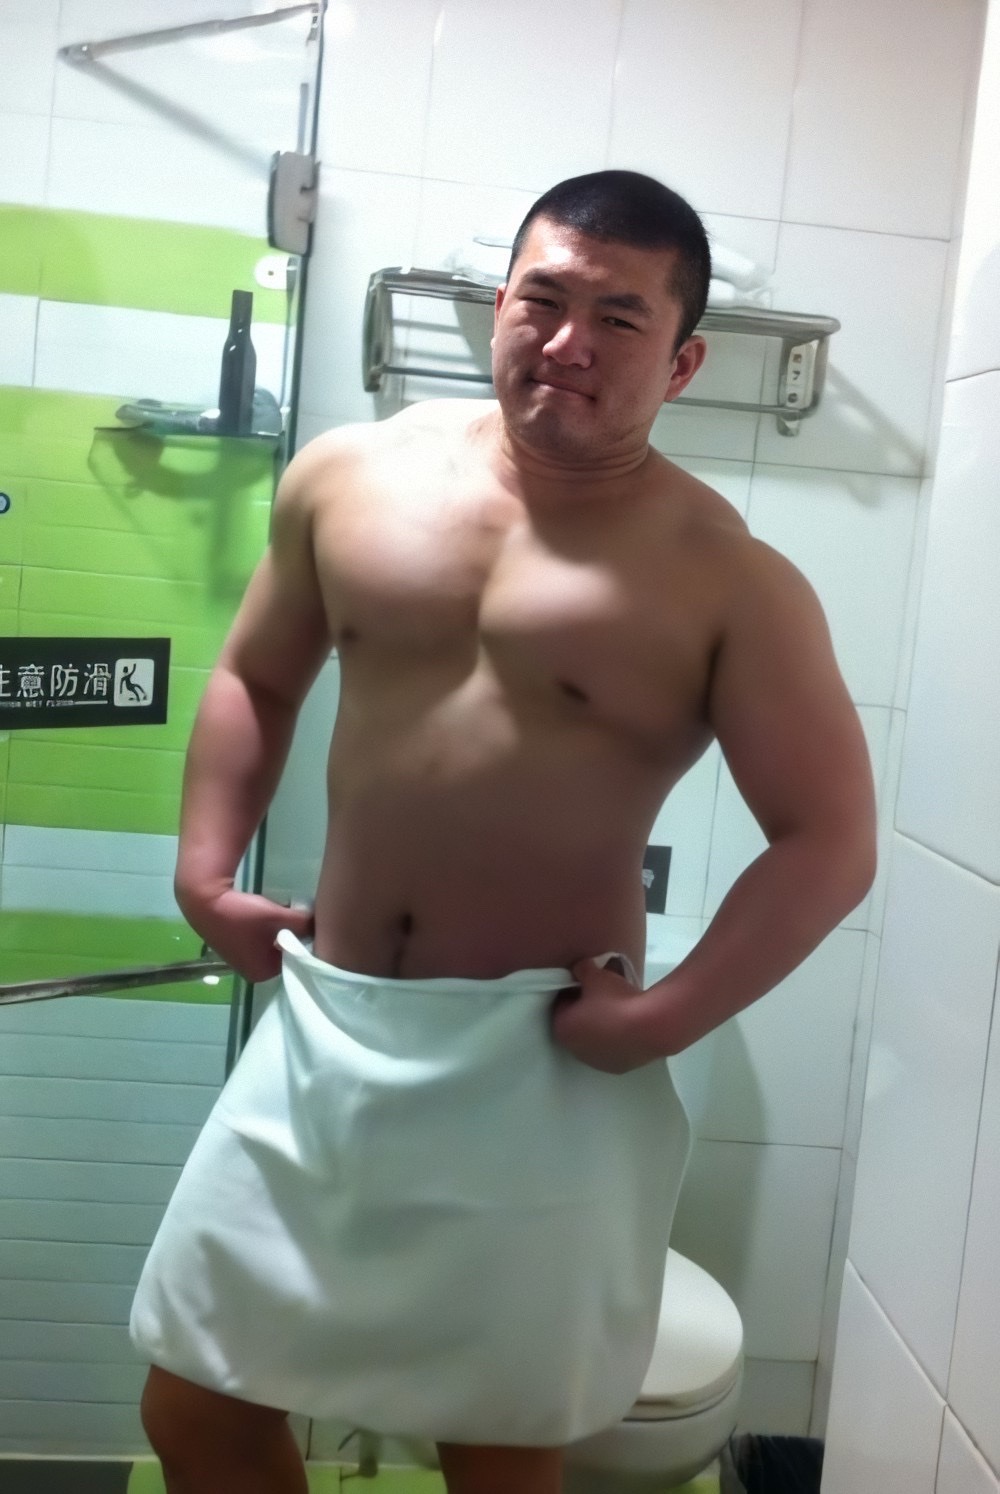 shinyknightaliengarden: Like man and towel. adult photos